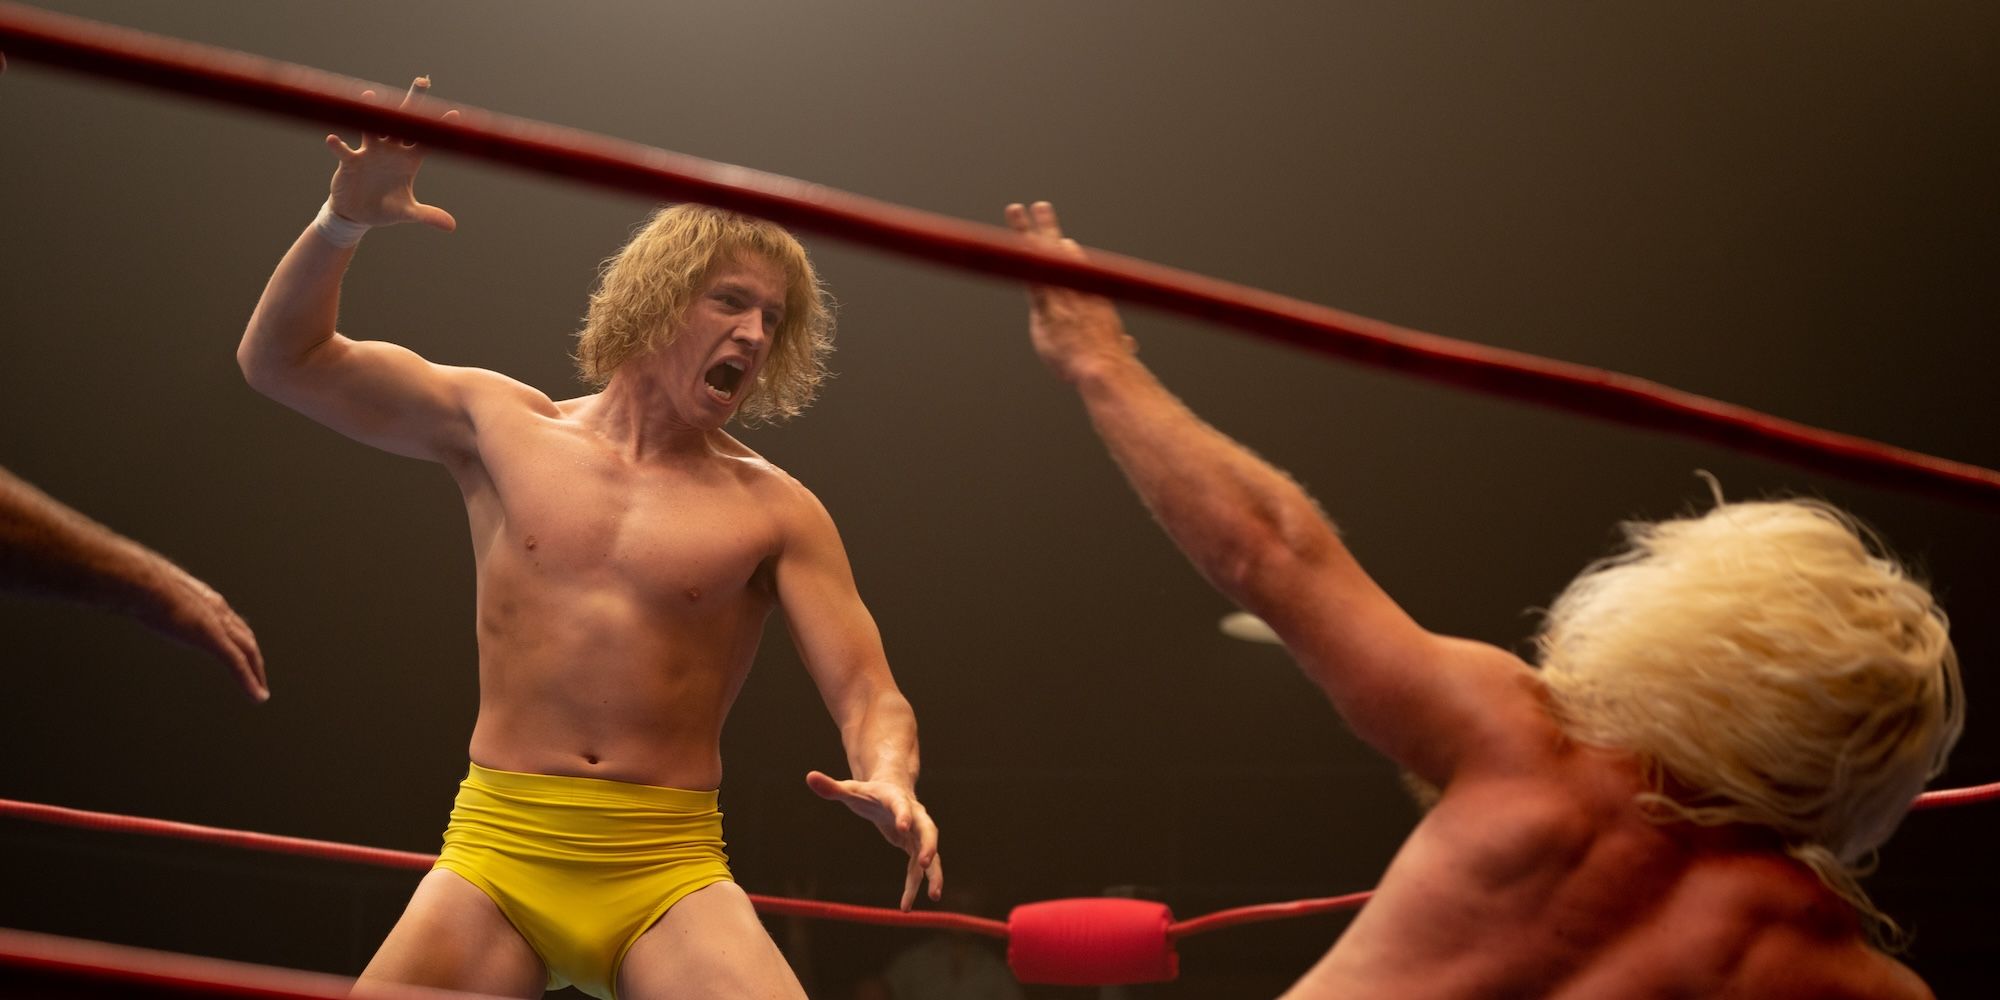 David Von Erich (Harris Dickinson) fights a wrestler in the ring in The Iron Claw.